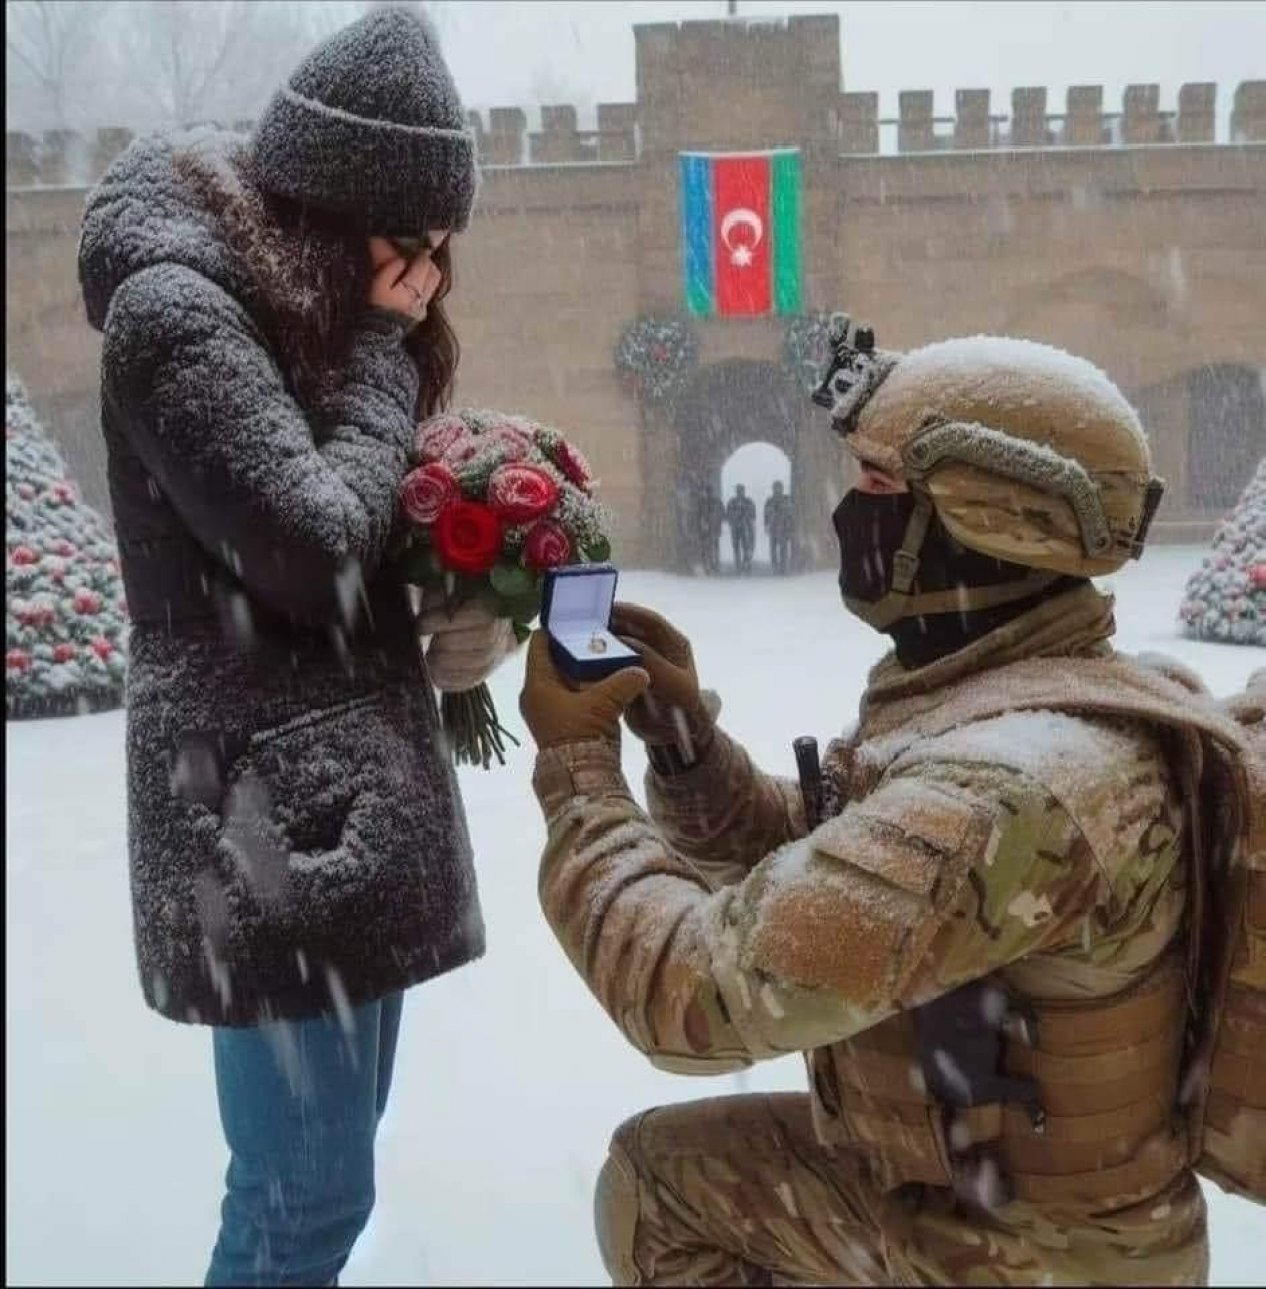 Marriage proposal photo in Azerbaijan’s Shusha: Real or fake?